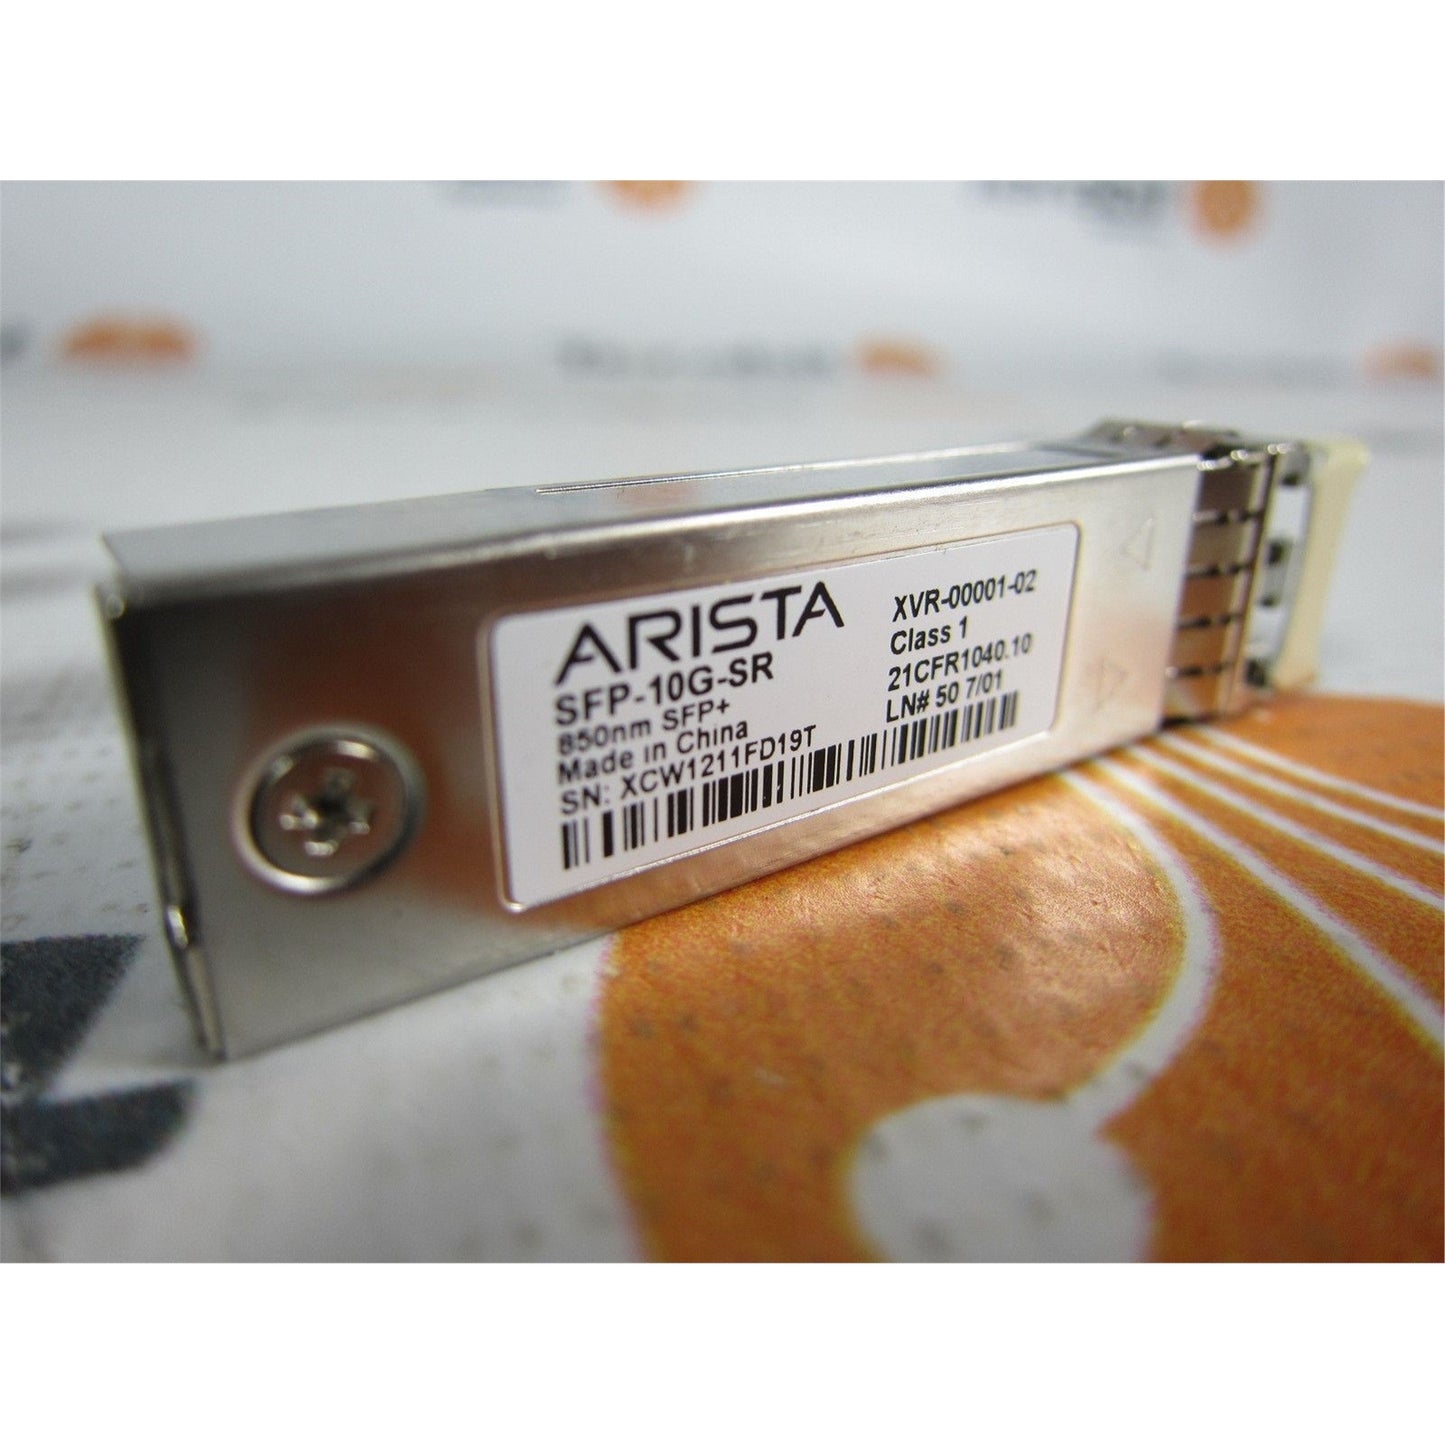 ARISTA SFP-10G-SR Transceiver (Used - Good)